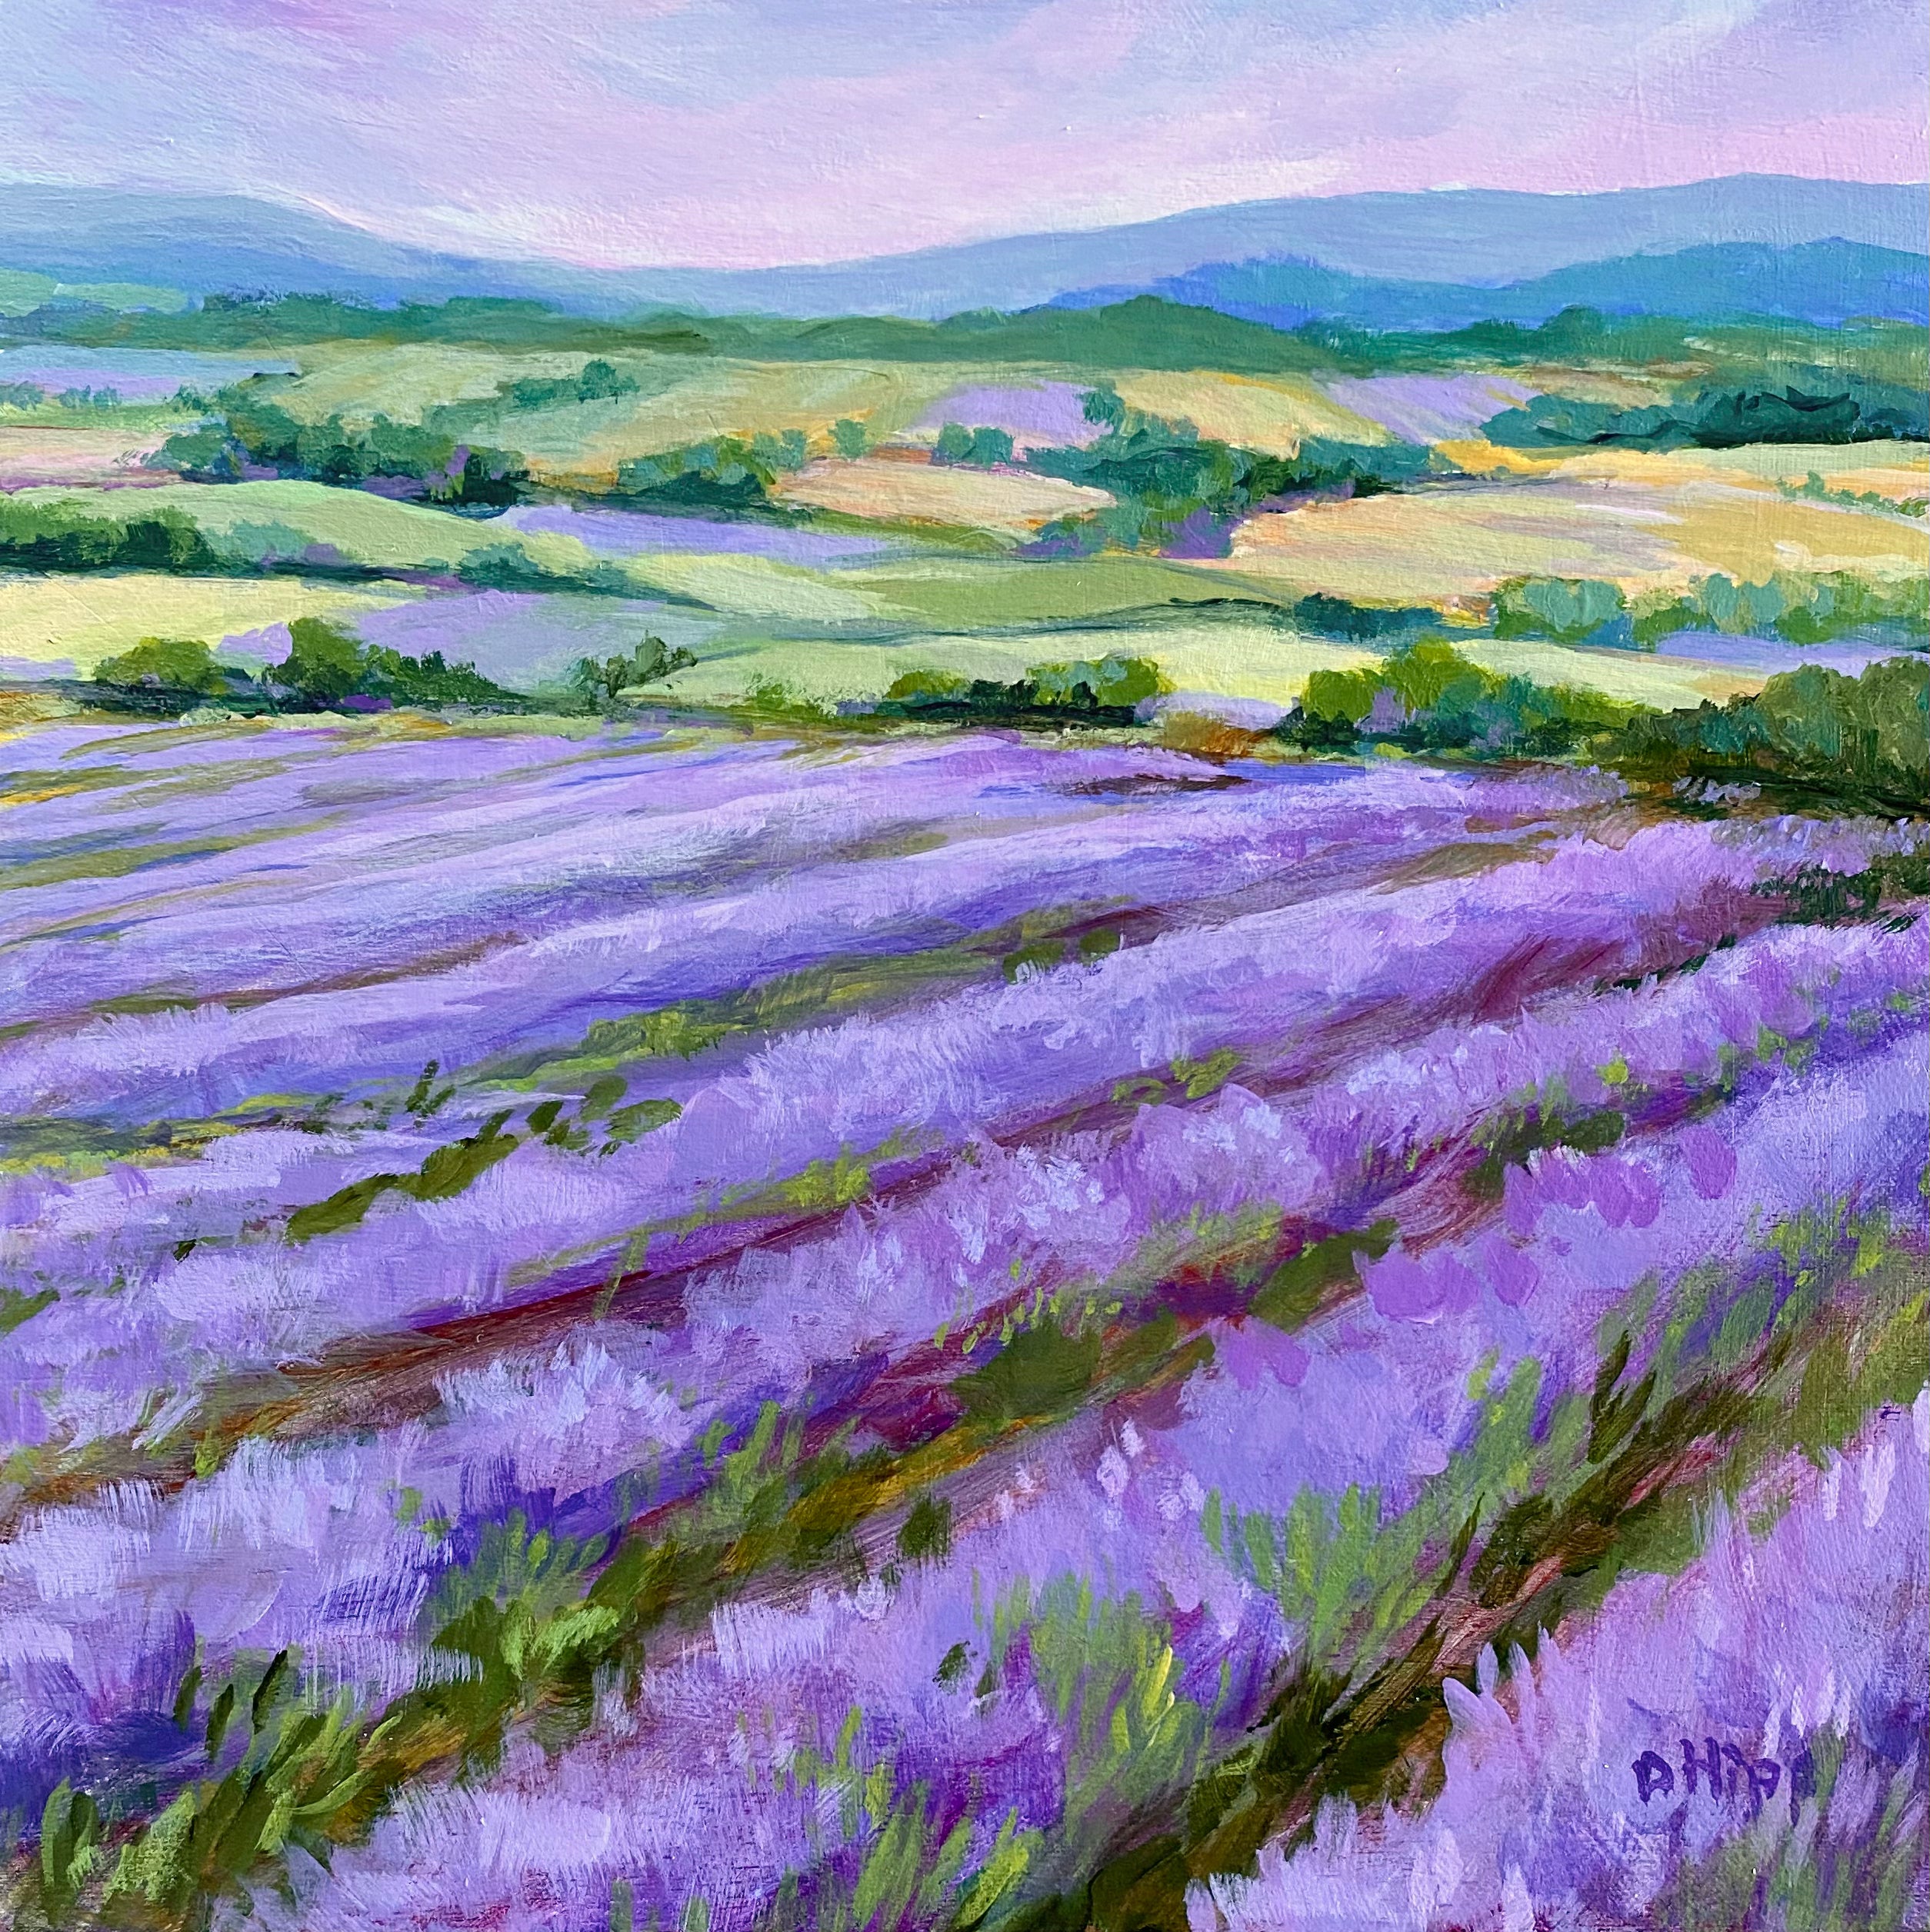 Lavender Field Floralscape